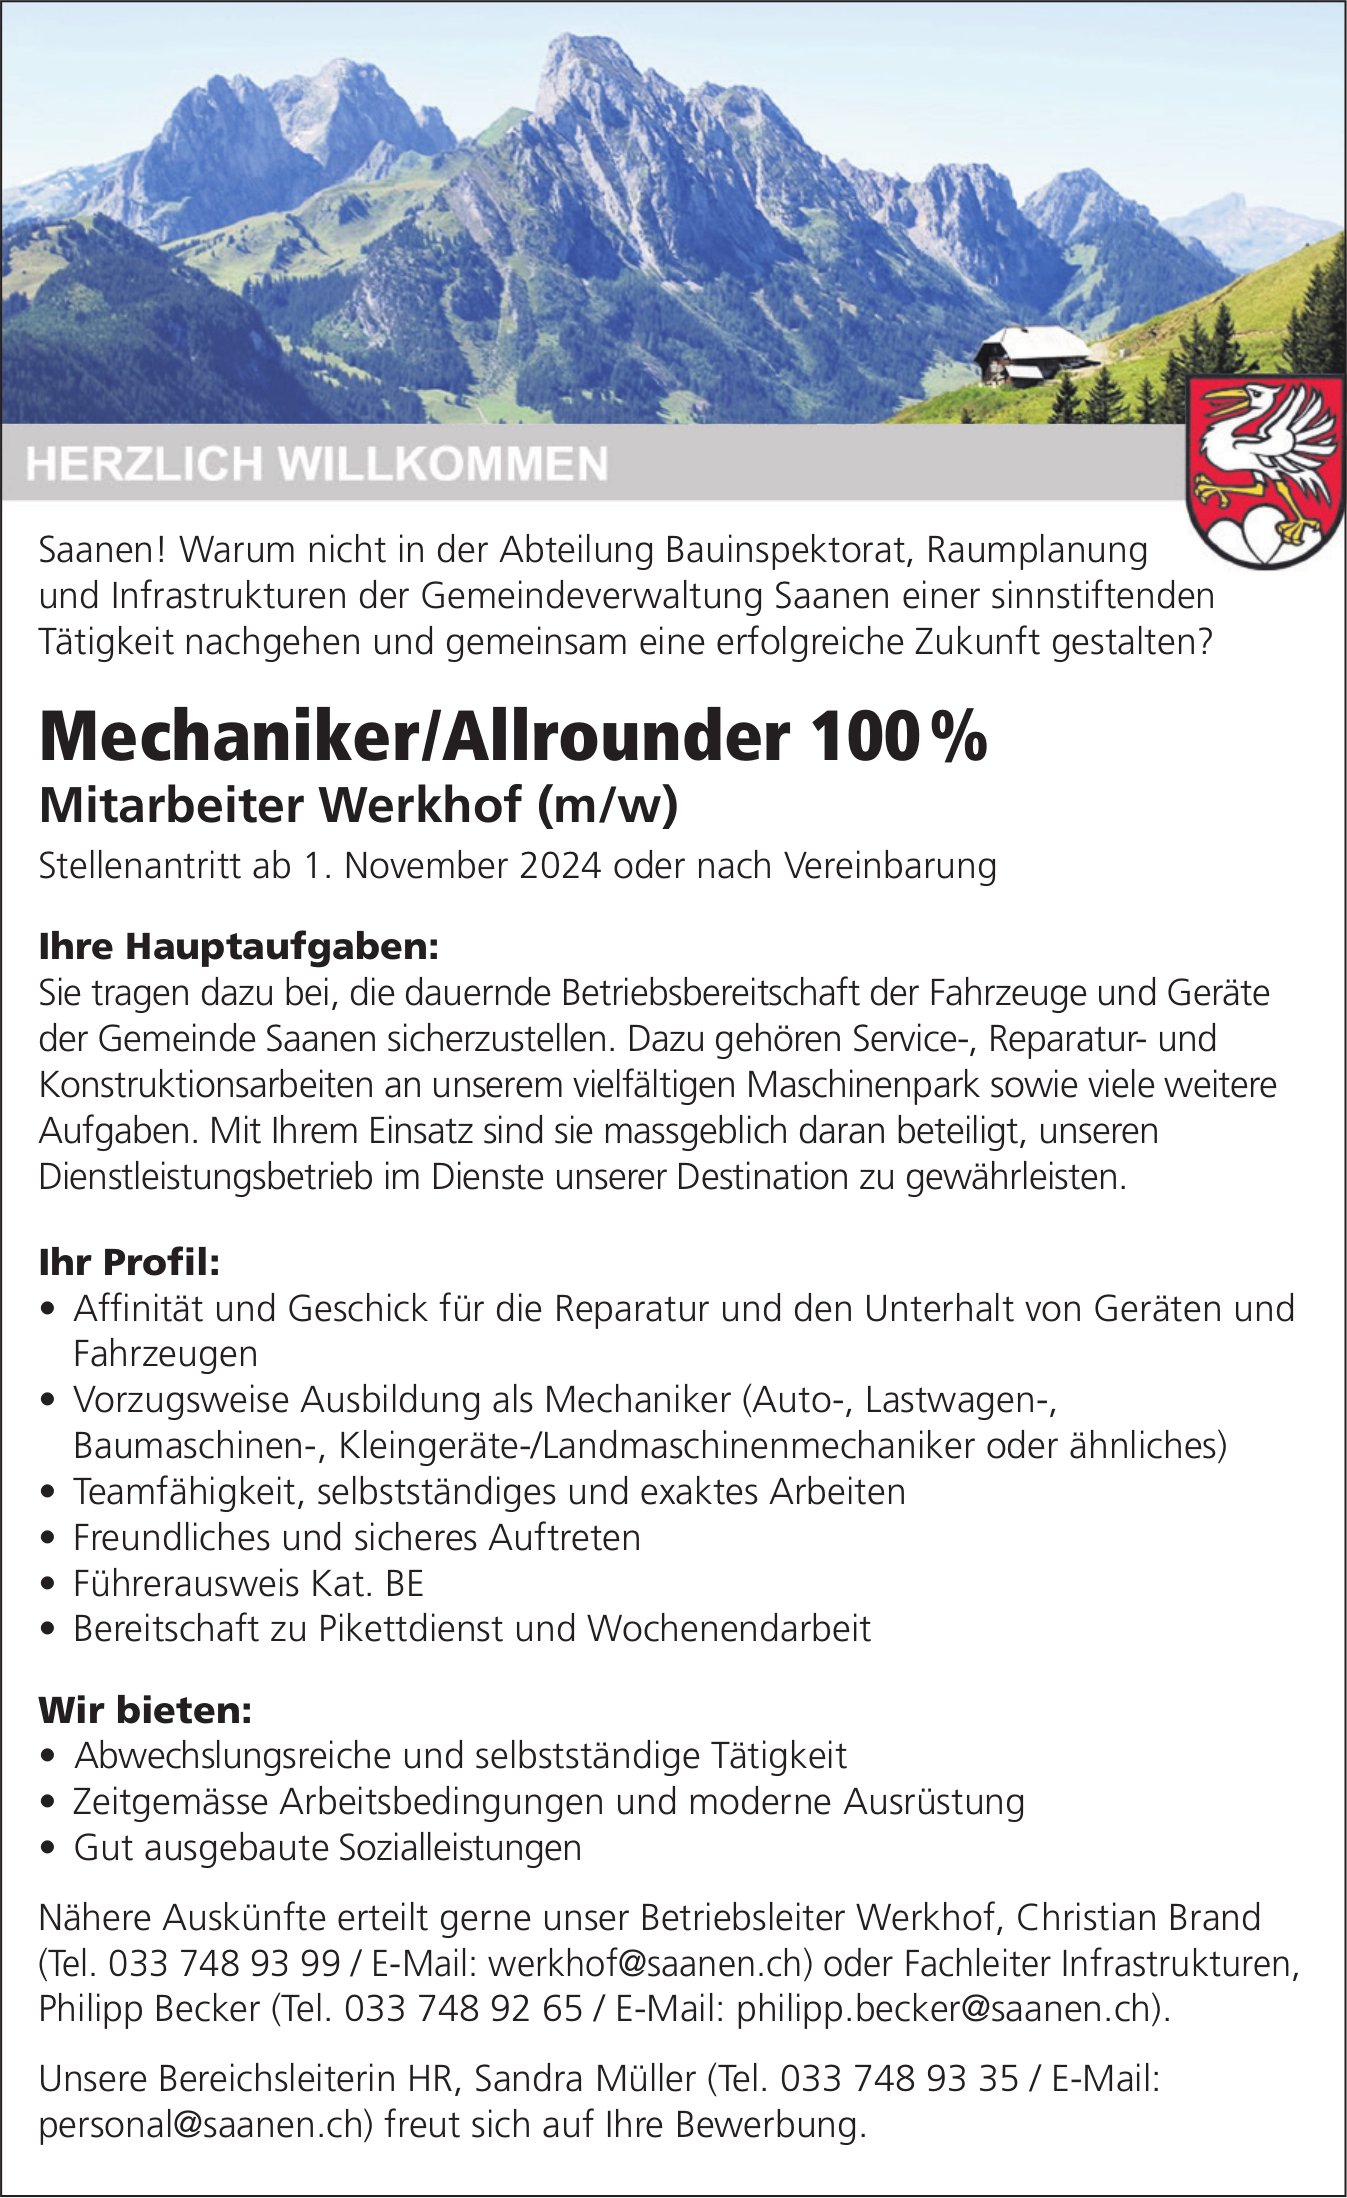 Mechaniker/Allrounder 100%, Gemeindeverwaltung, Saanen, gesucht